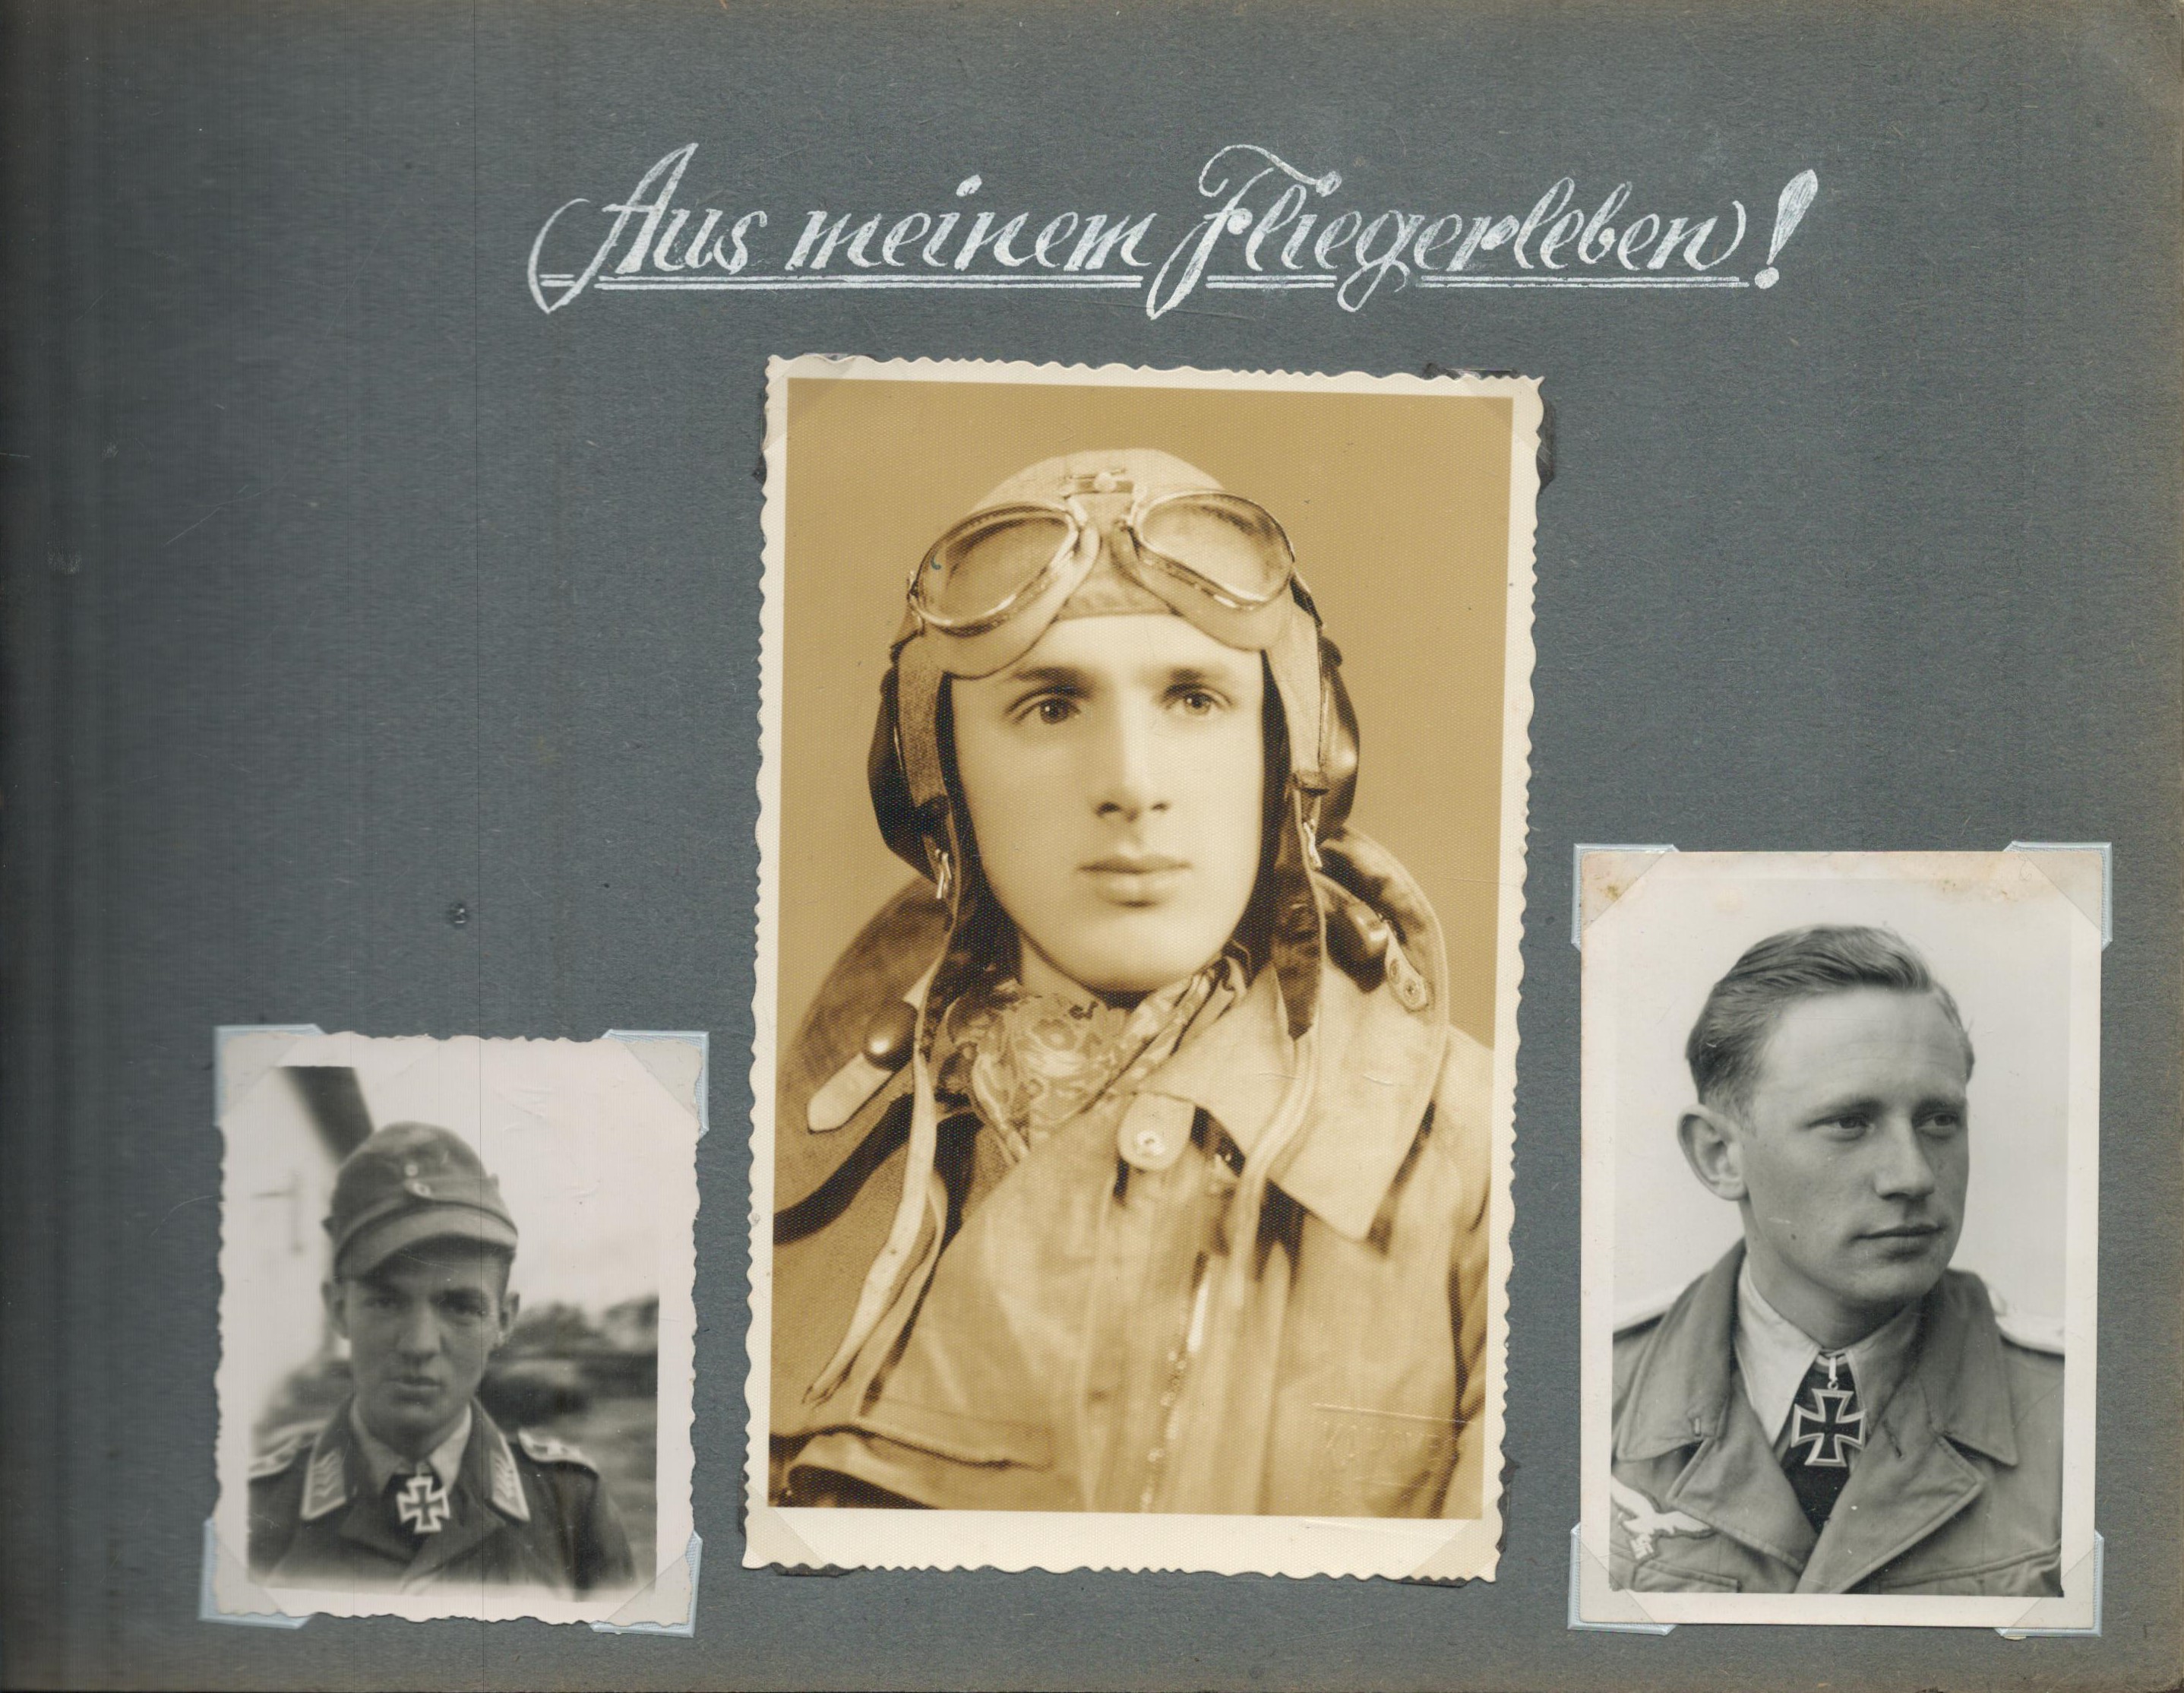 Luftwaffe Stuka Operator photo album of the career and war memories of Erich Heine rear gunner and - Image 3 of 12